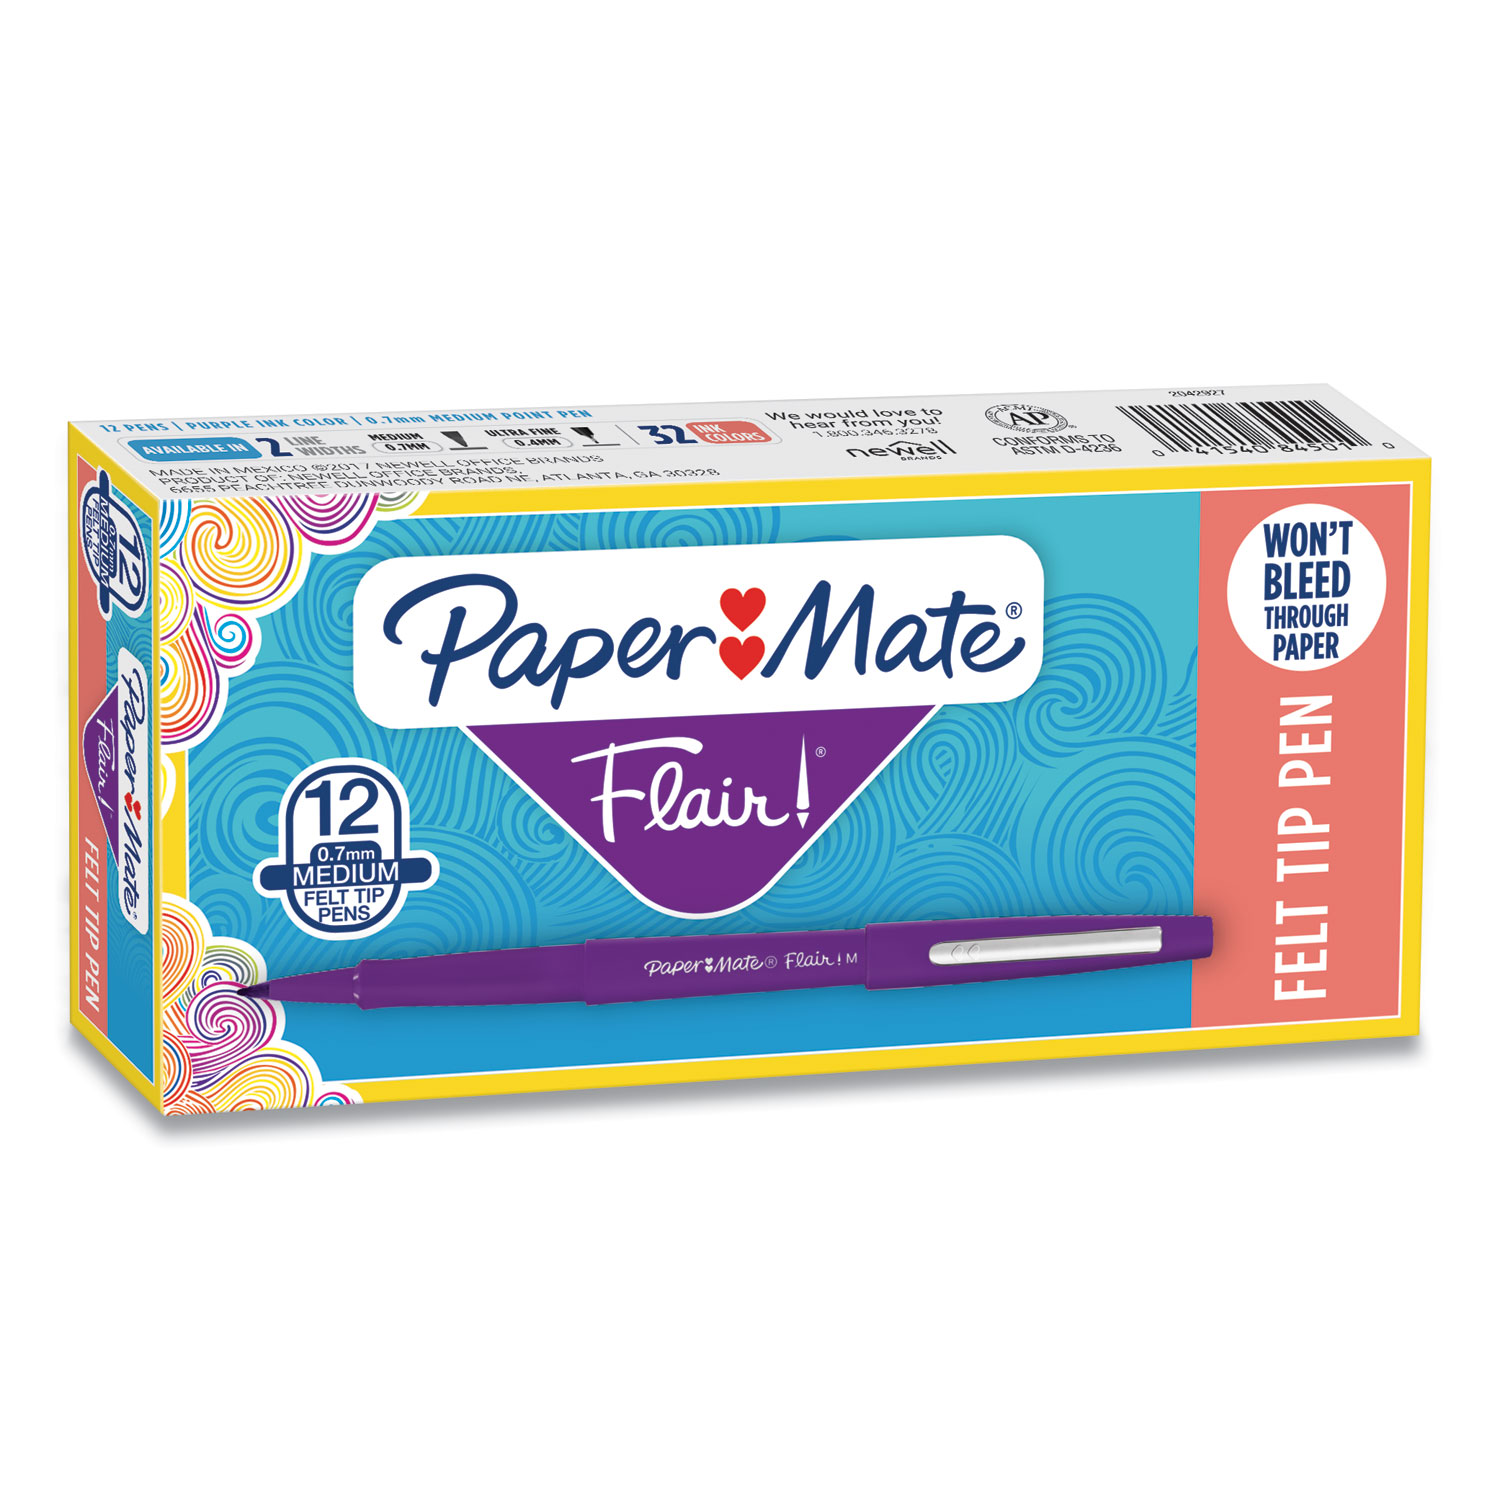 Paper Mate Flair Felt Tip Promotional Pen | ePromos